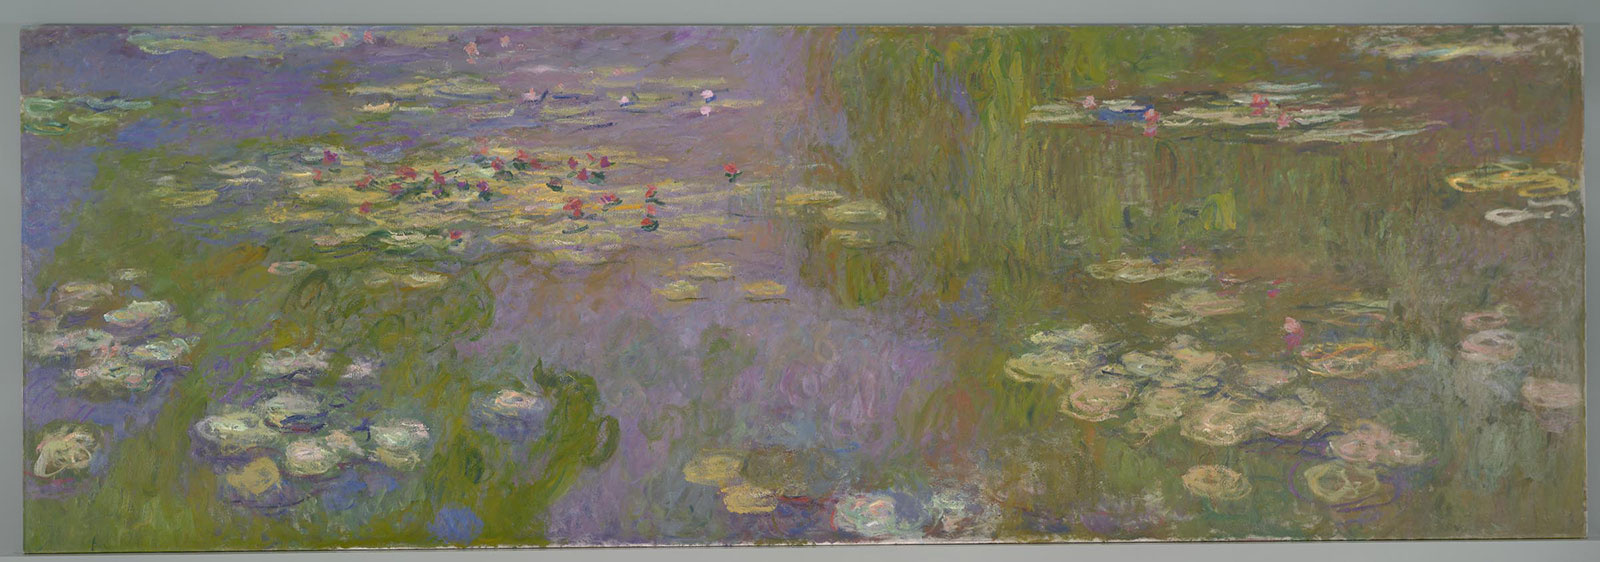 Claude Monet. Water lilies (nymph)